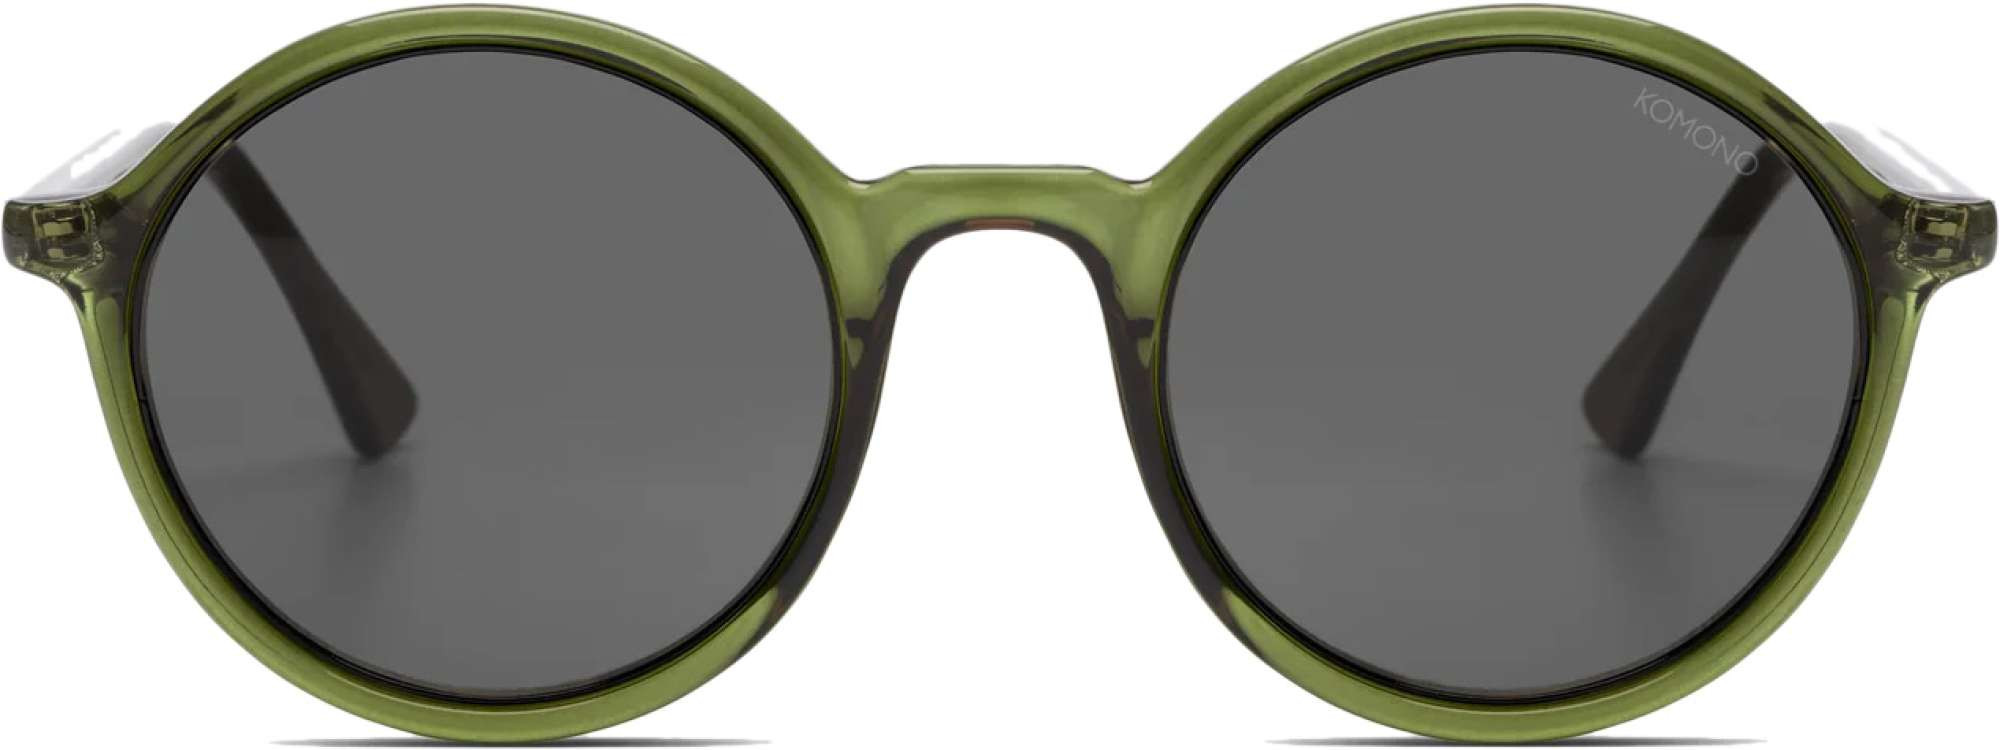 Afbeelding van Komono Madison fern sunglasses